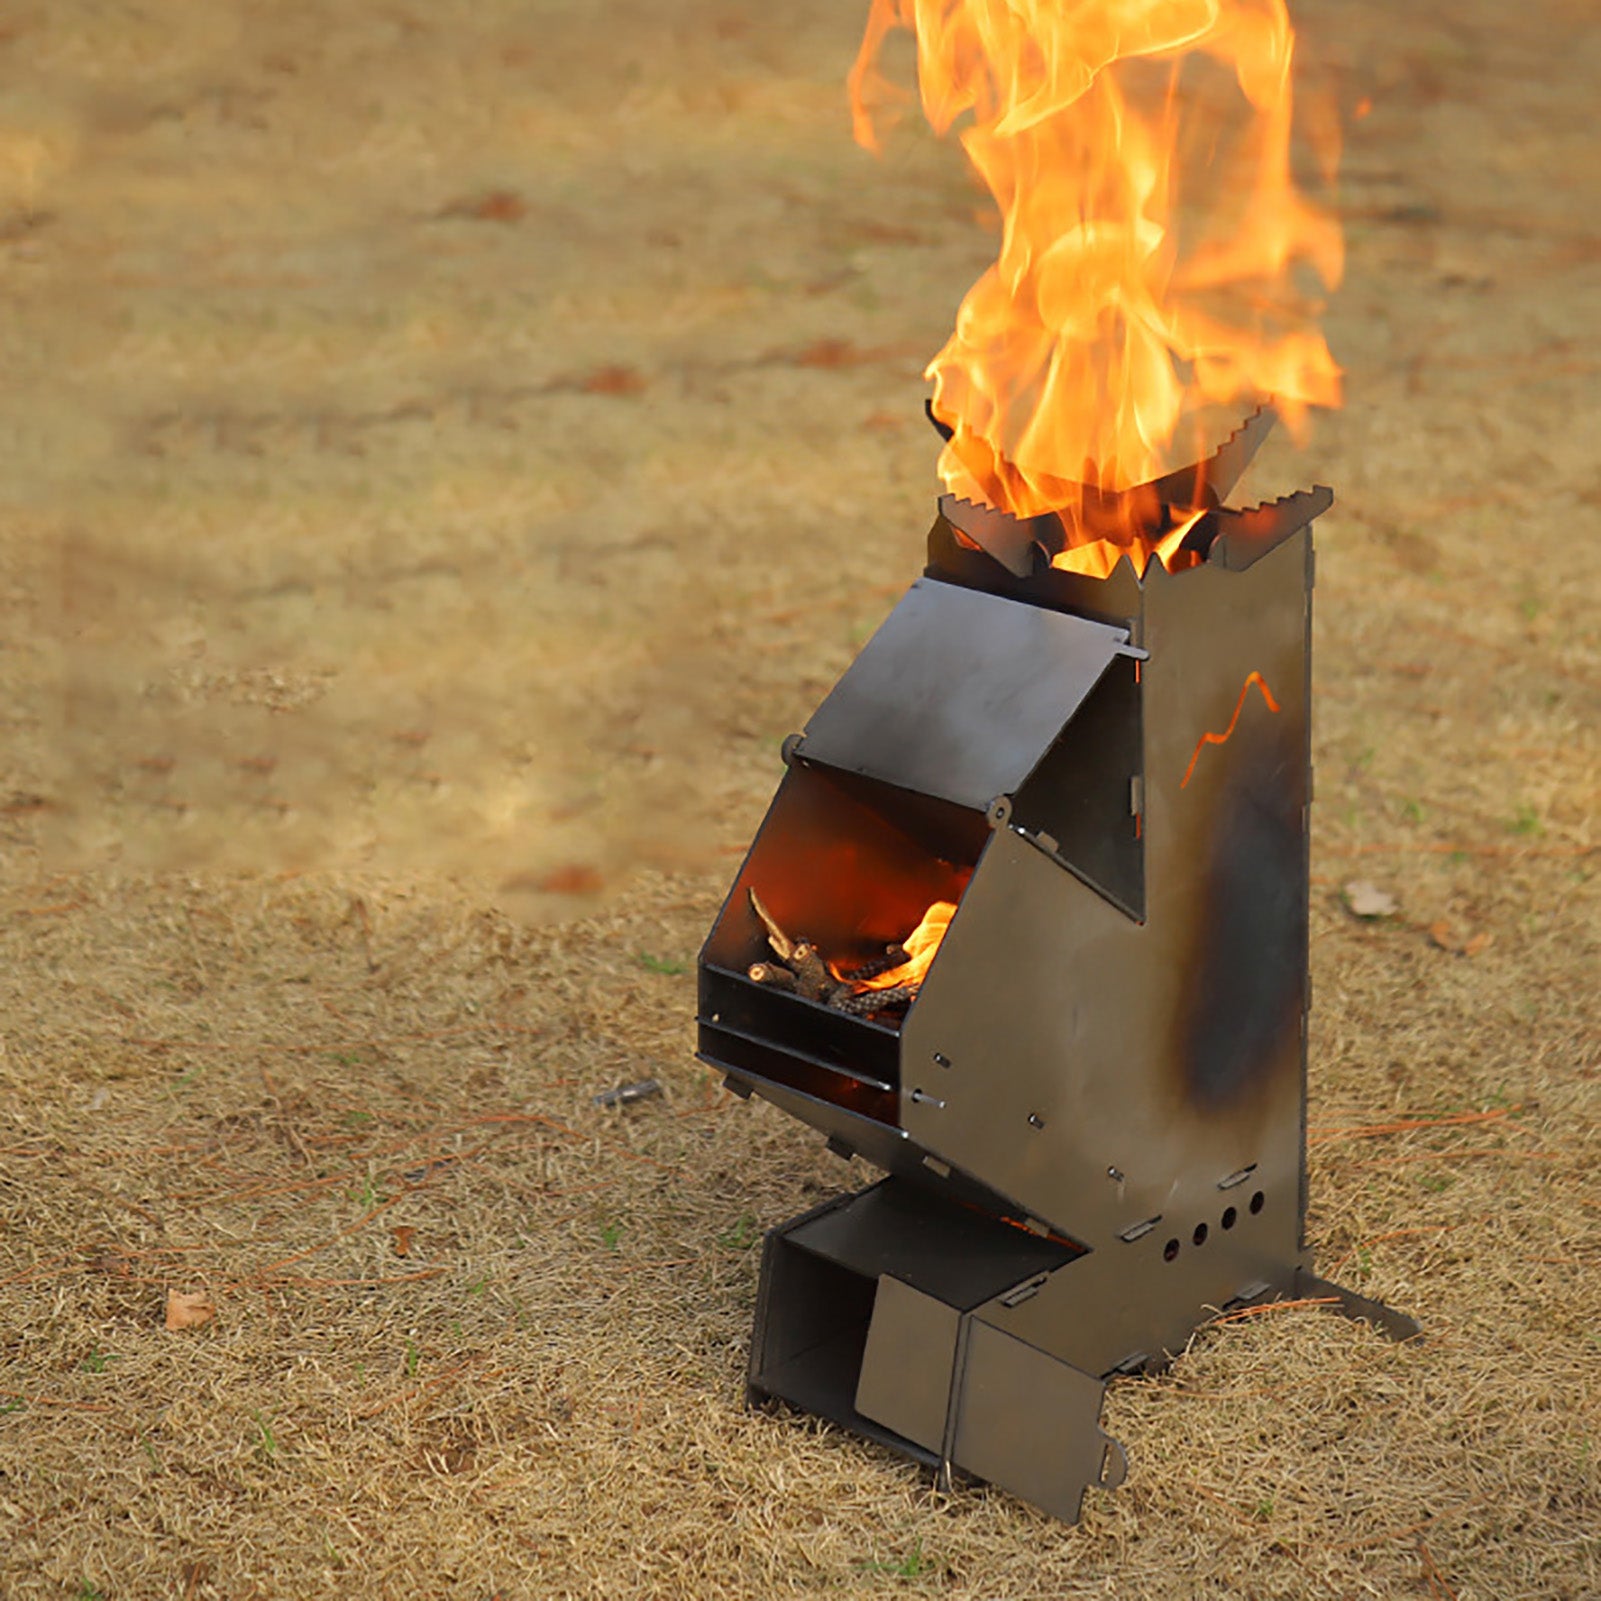 Portable Outdoor Rocket Wood Burning Stove Heater